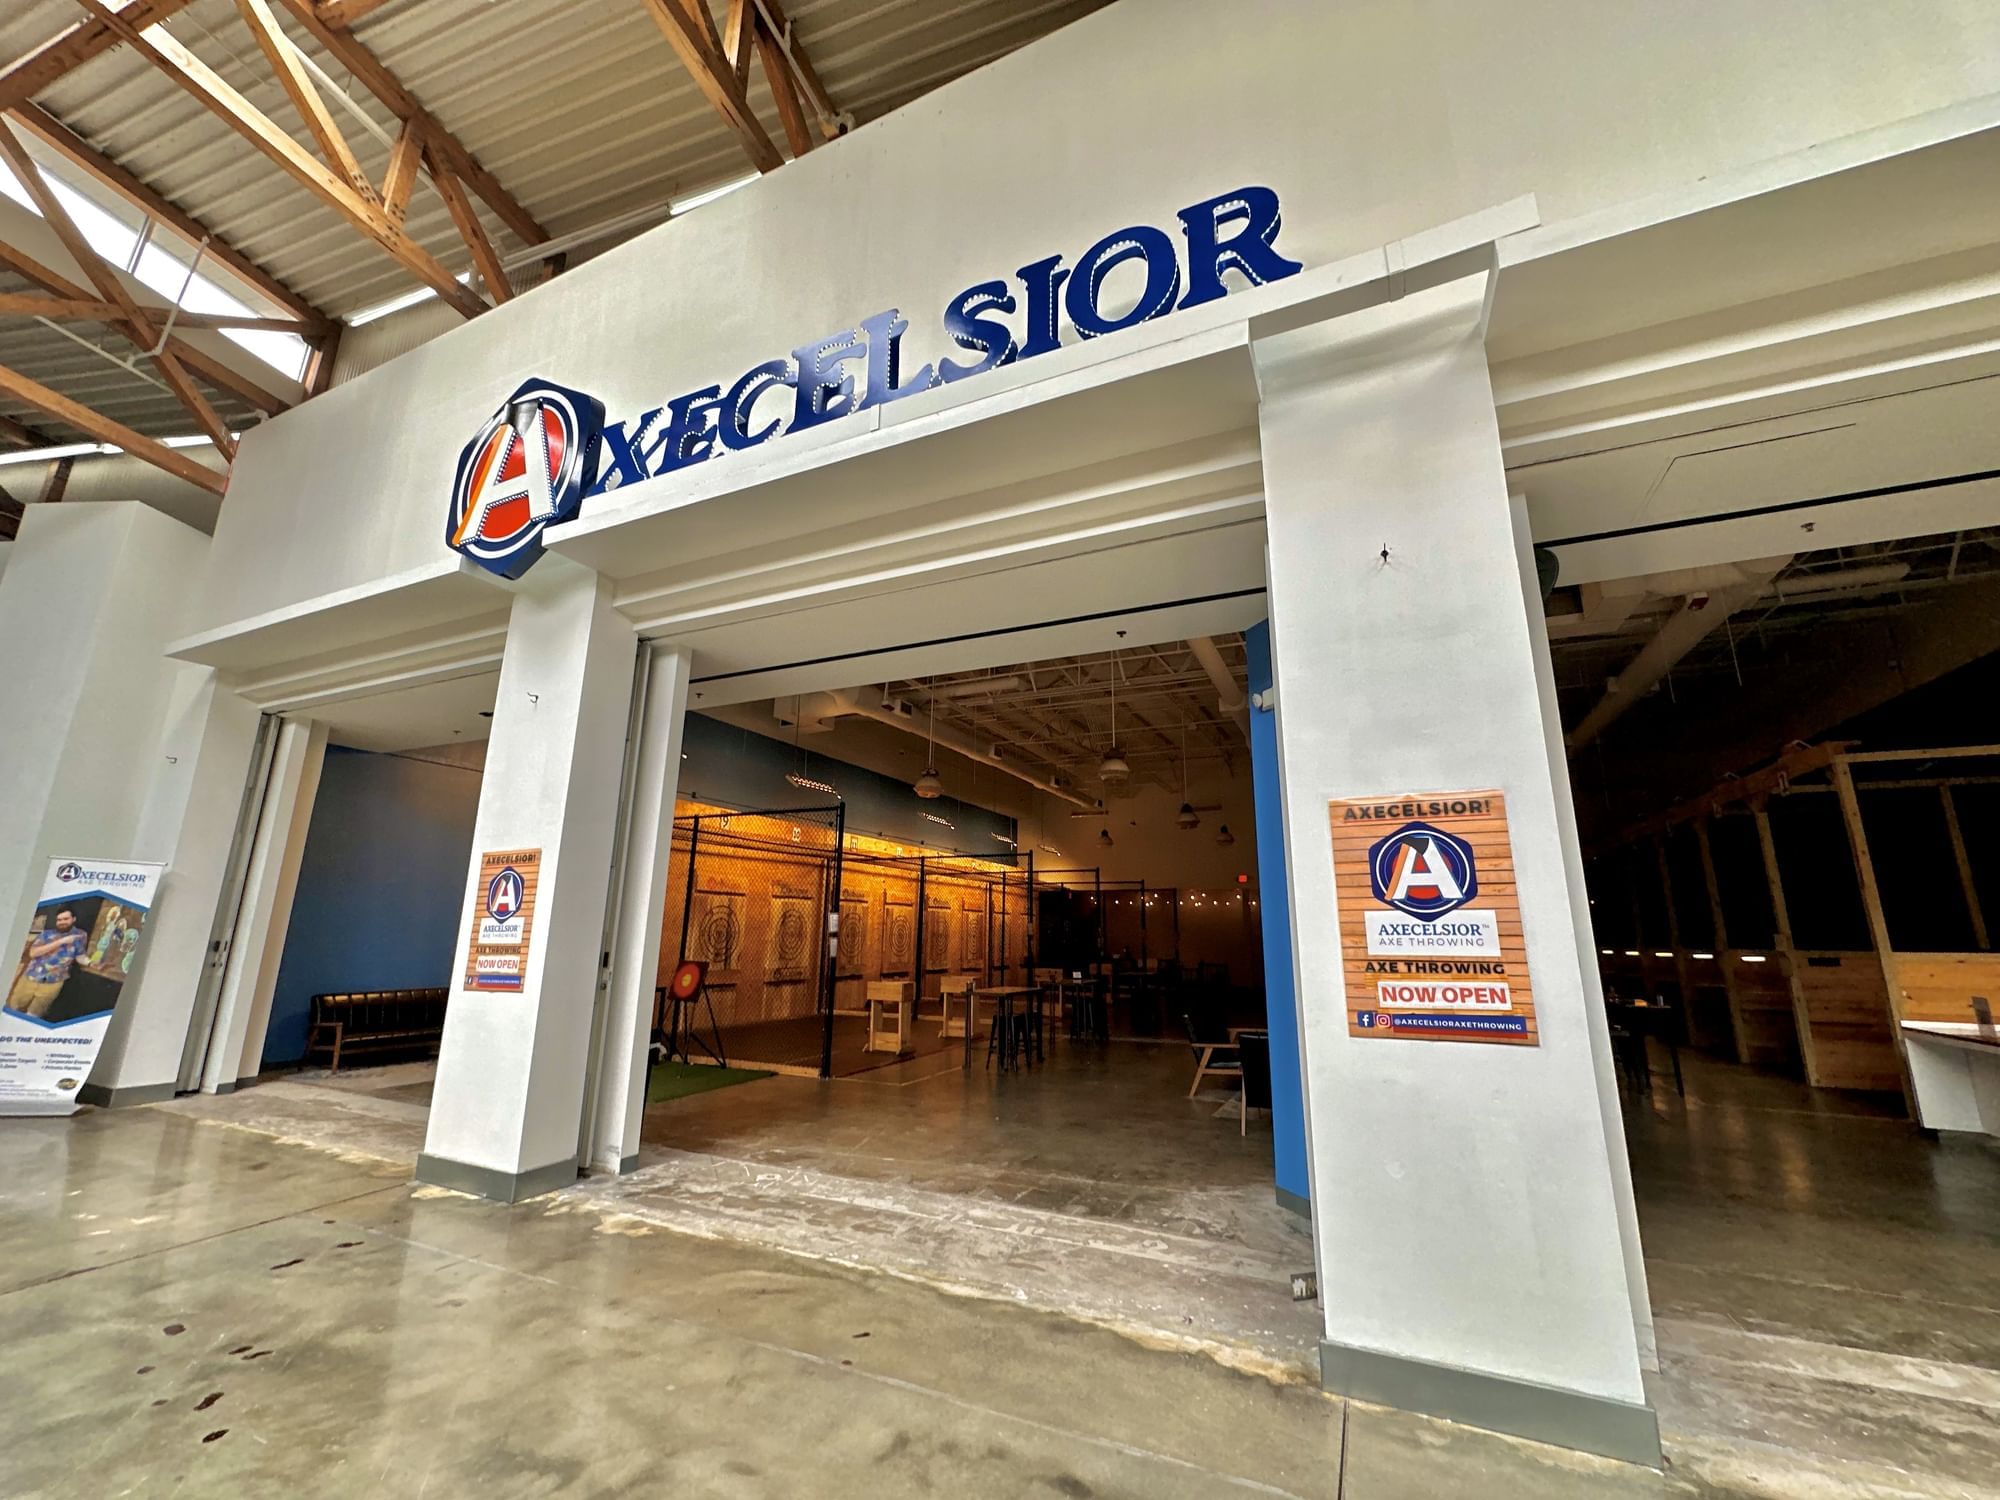 Exterior image of axe-throwing venue Axecelsior, located inside of Dezerland Park Orlando.